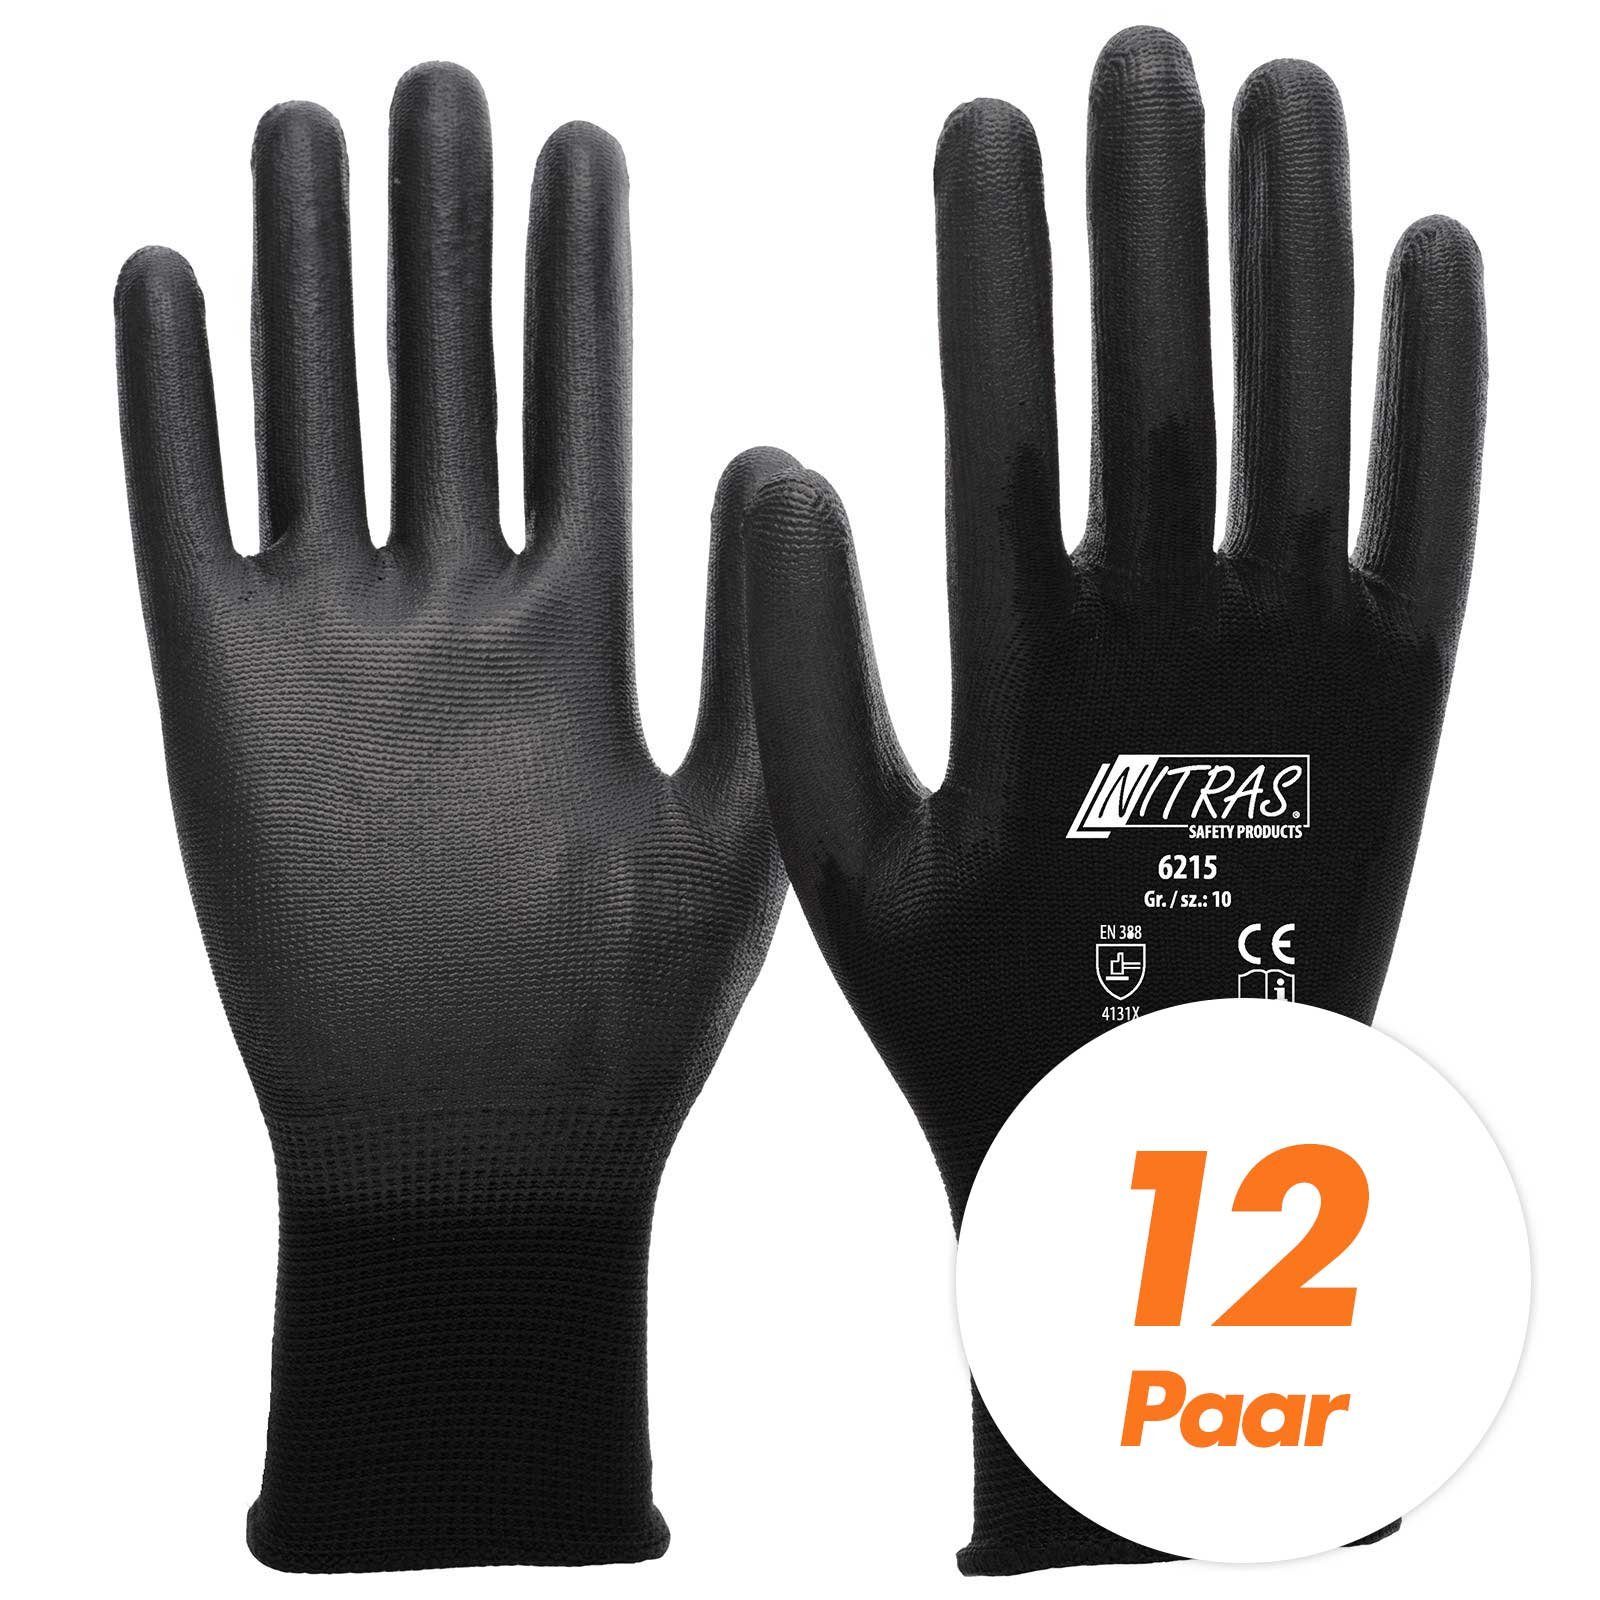 Nitras Nitril-Handschuhe NITRAS 6215 Nylon Strickhandschuh, Gartenhandschuhe - 12 Paar (Spar-Set) | Handschuhe